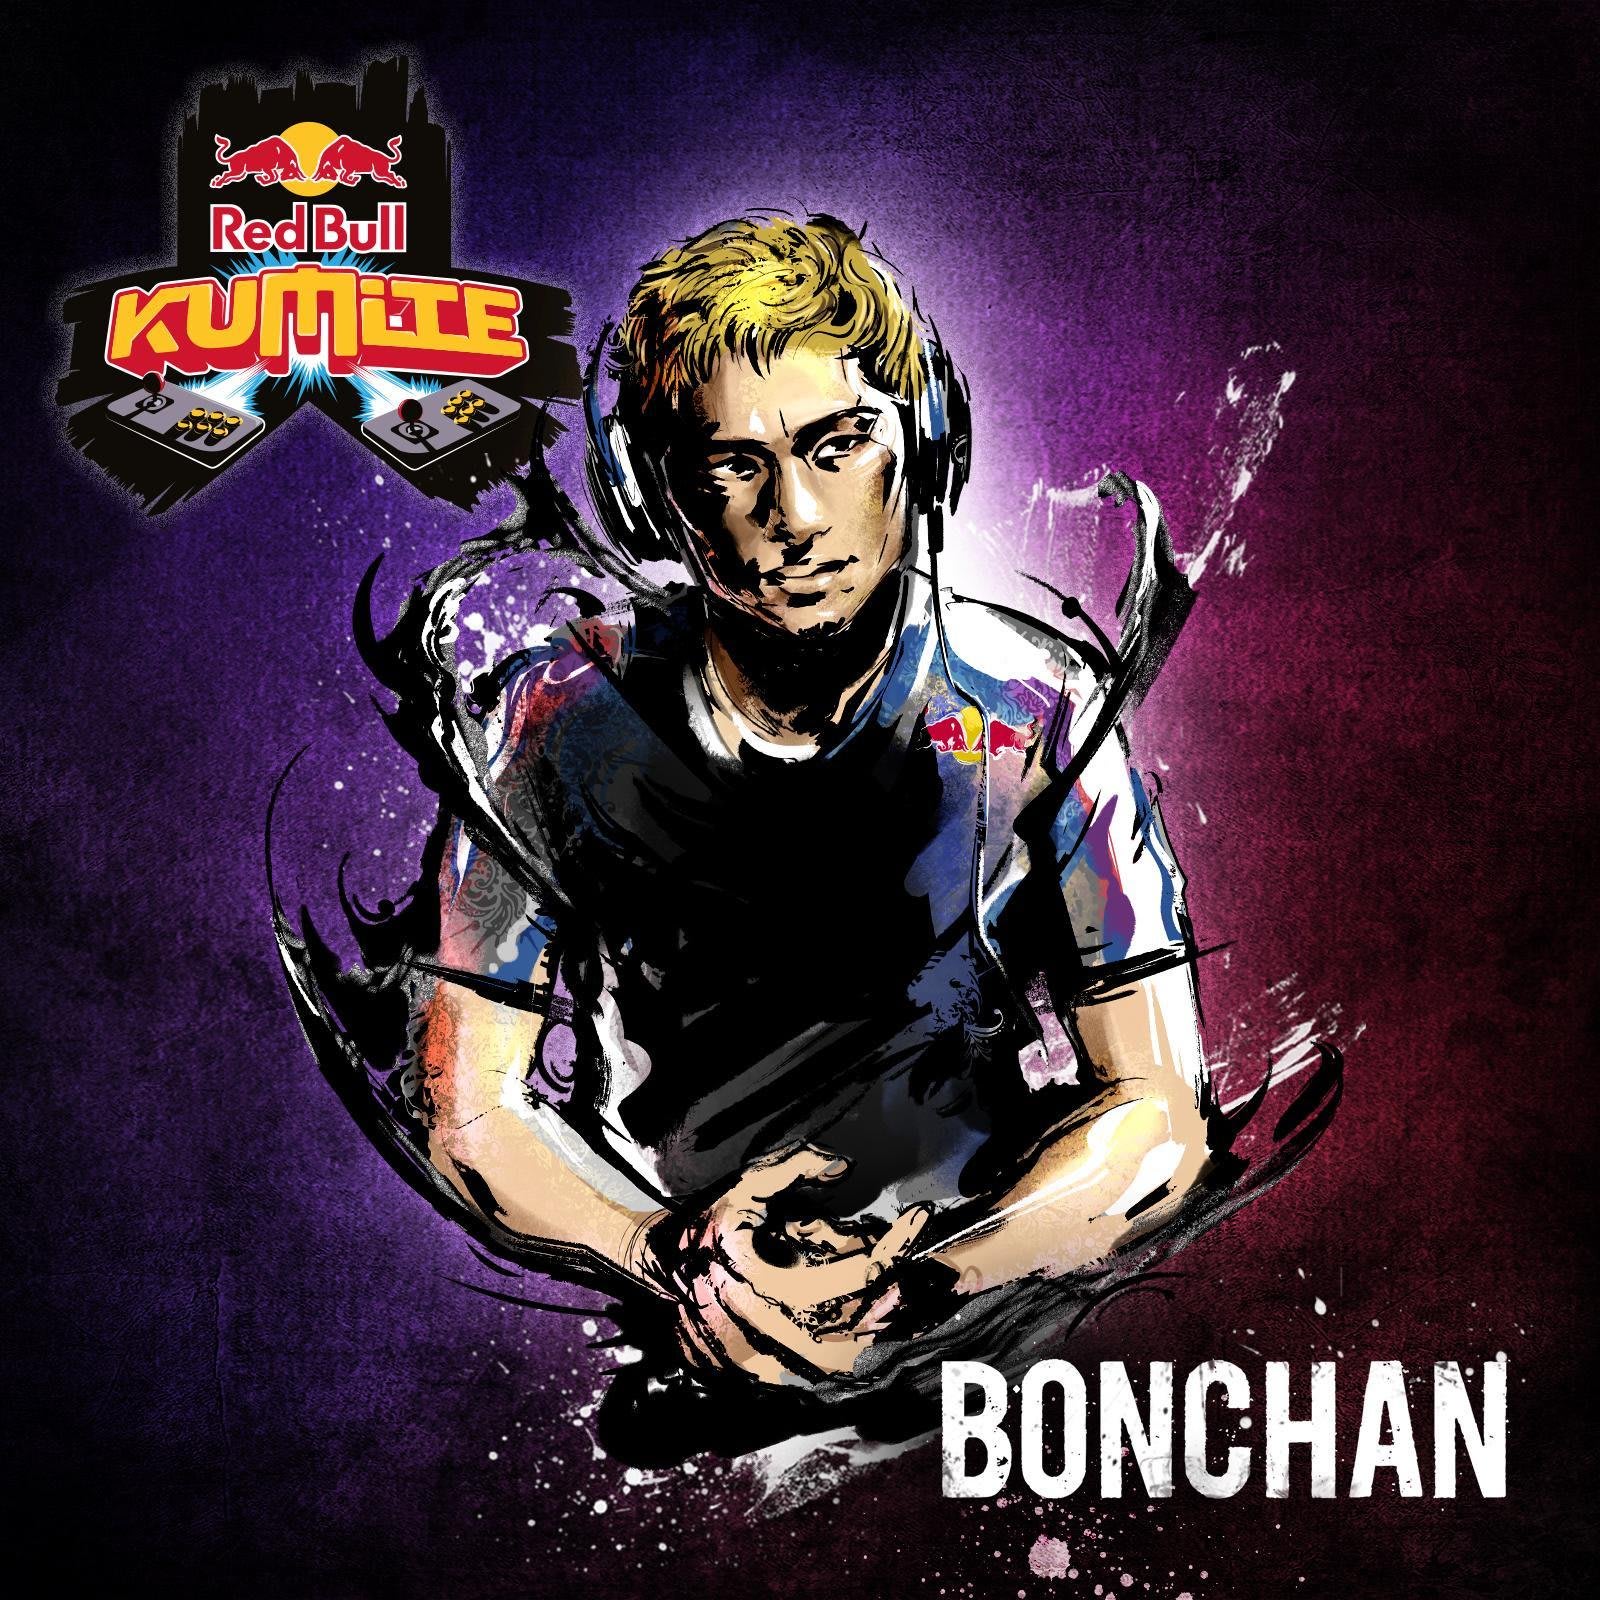 REC Punk (Karin) VS Red Bull Bonchan (Karin) - VSFighting Grand Finals -  CPT 2019 